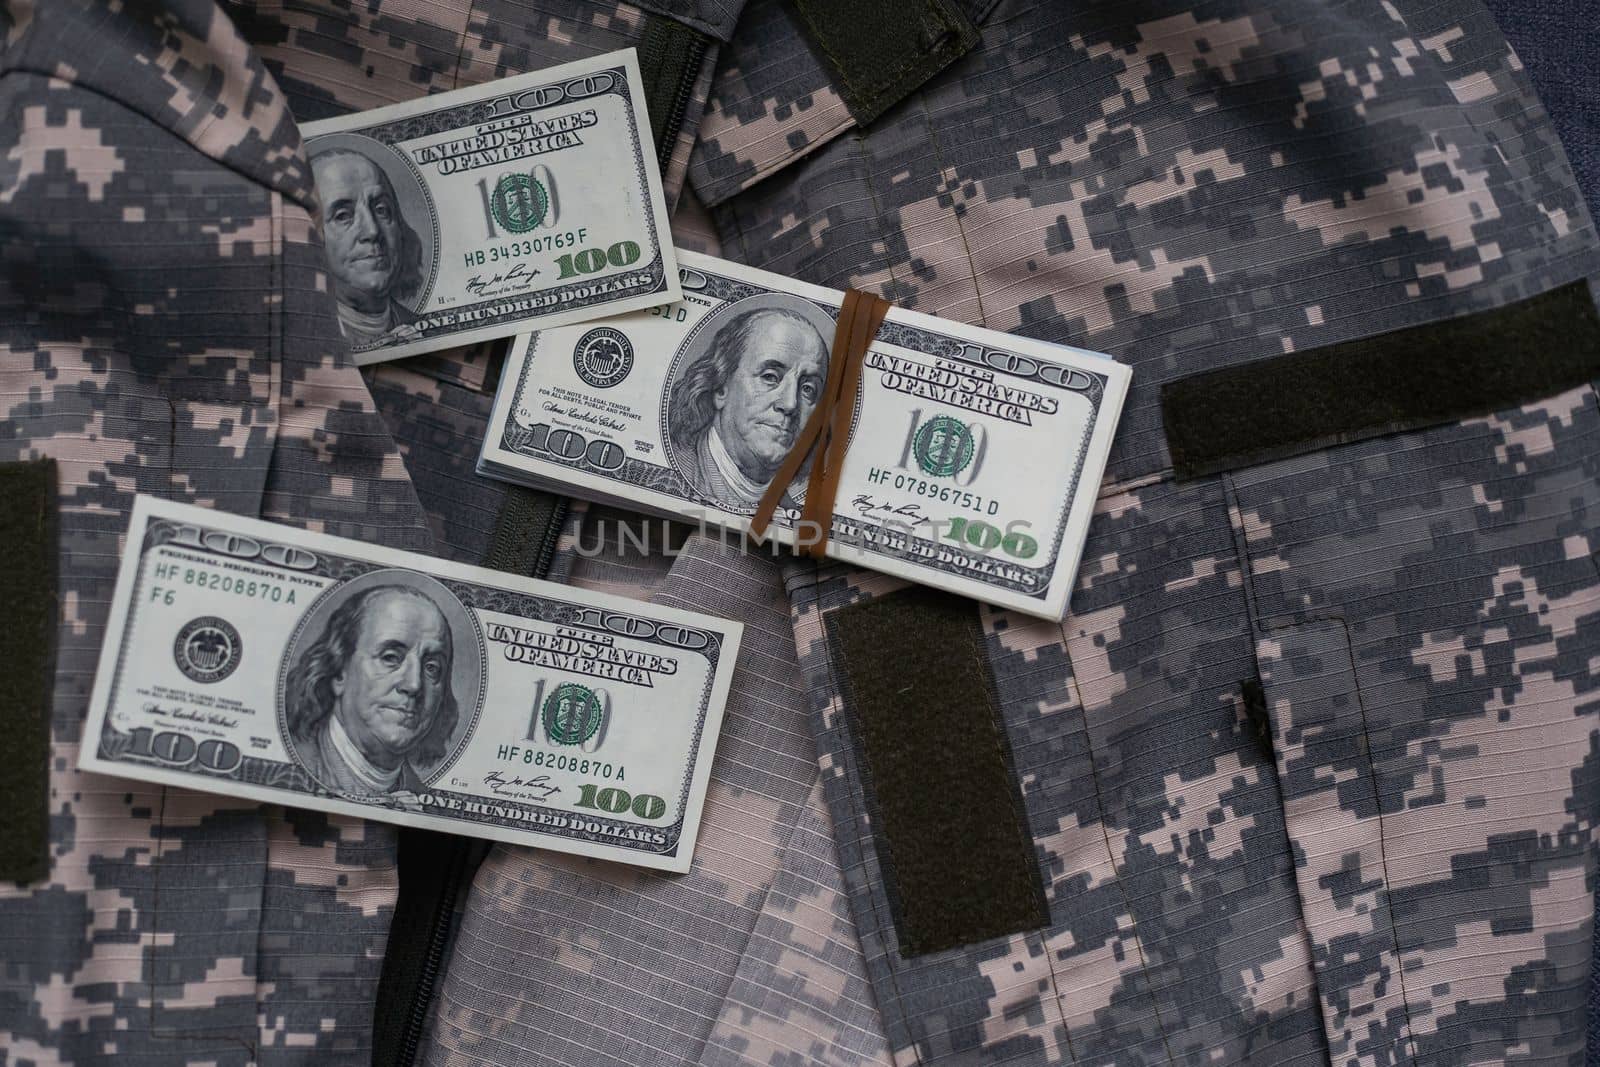 passports, money, military uniform texture of pixeled camouflage